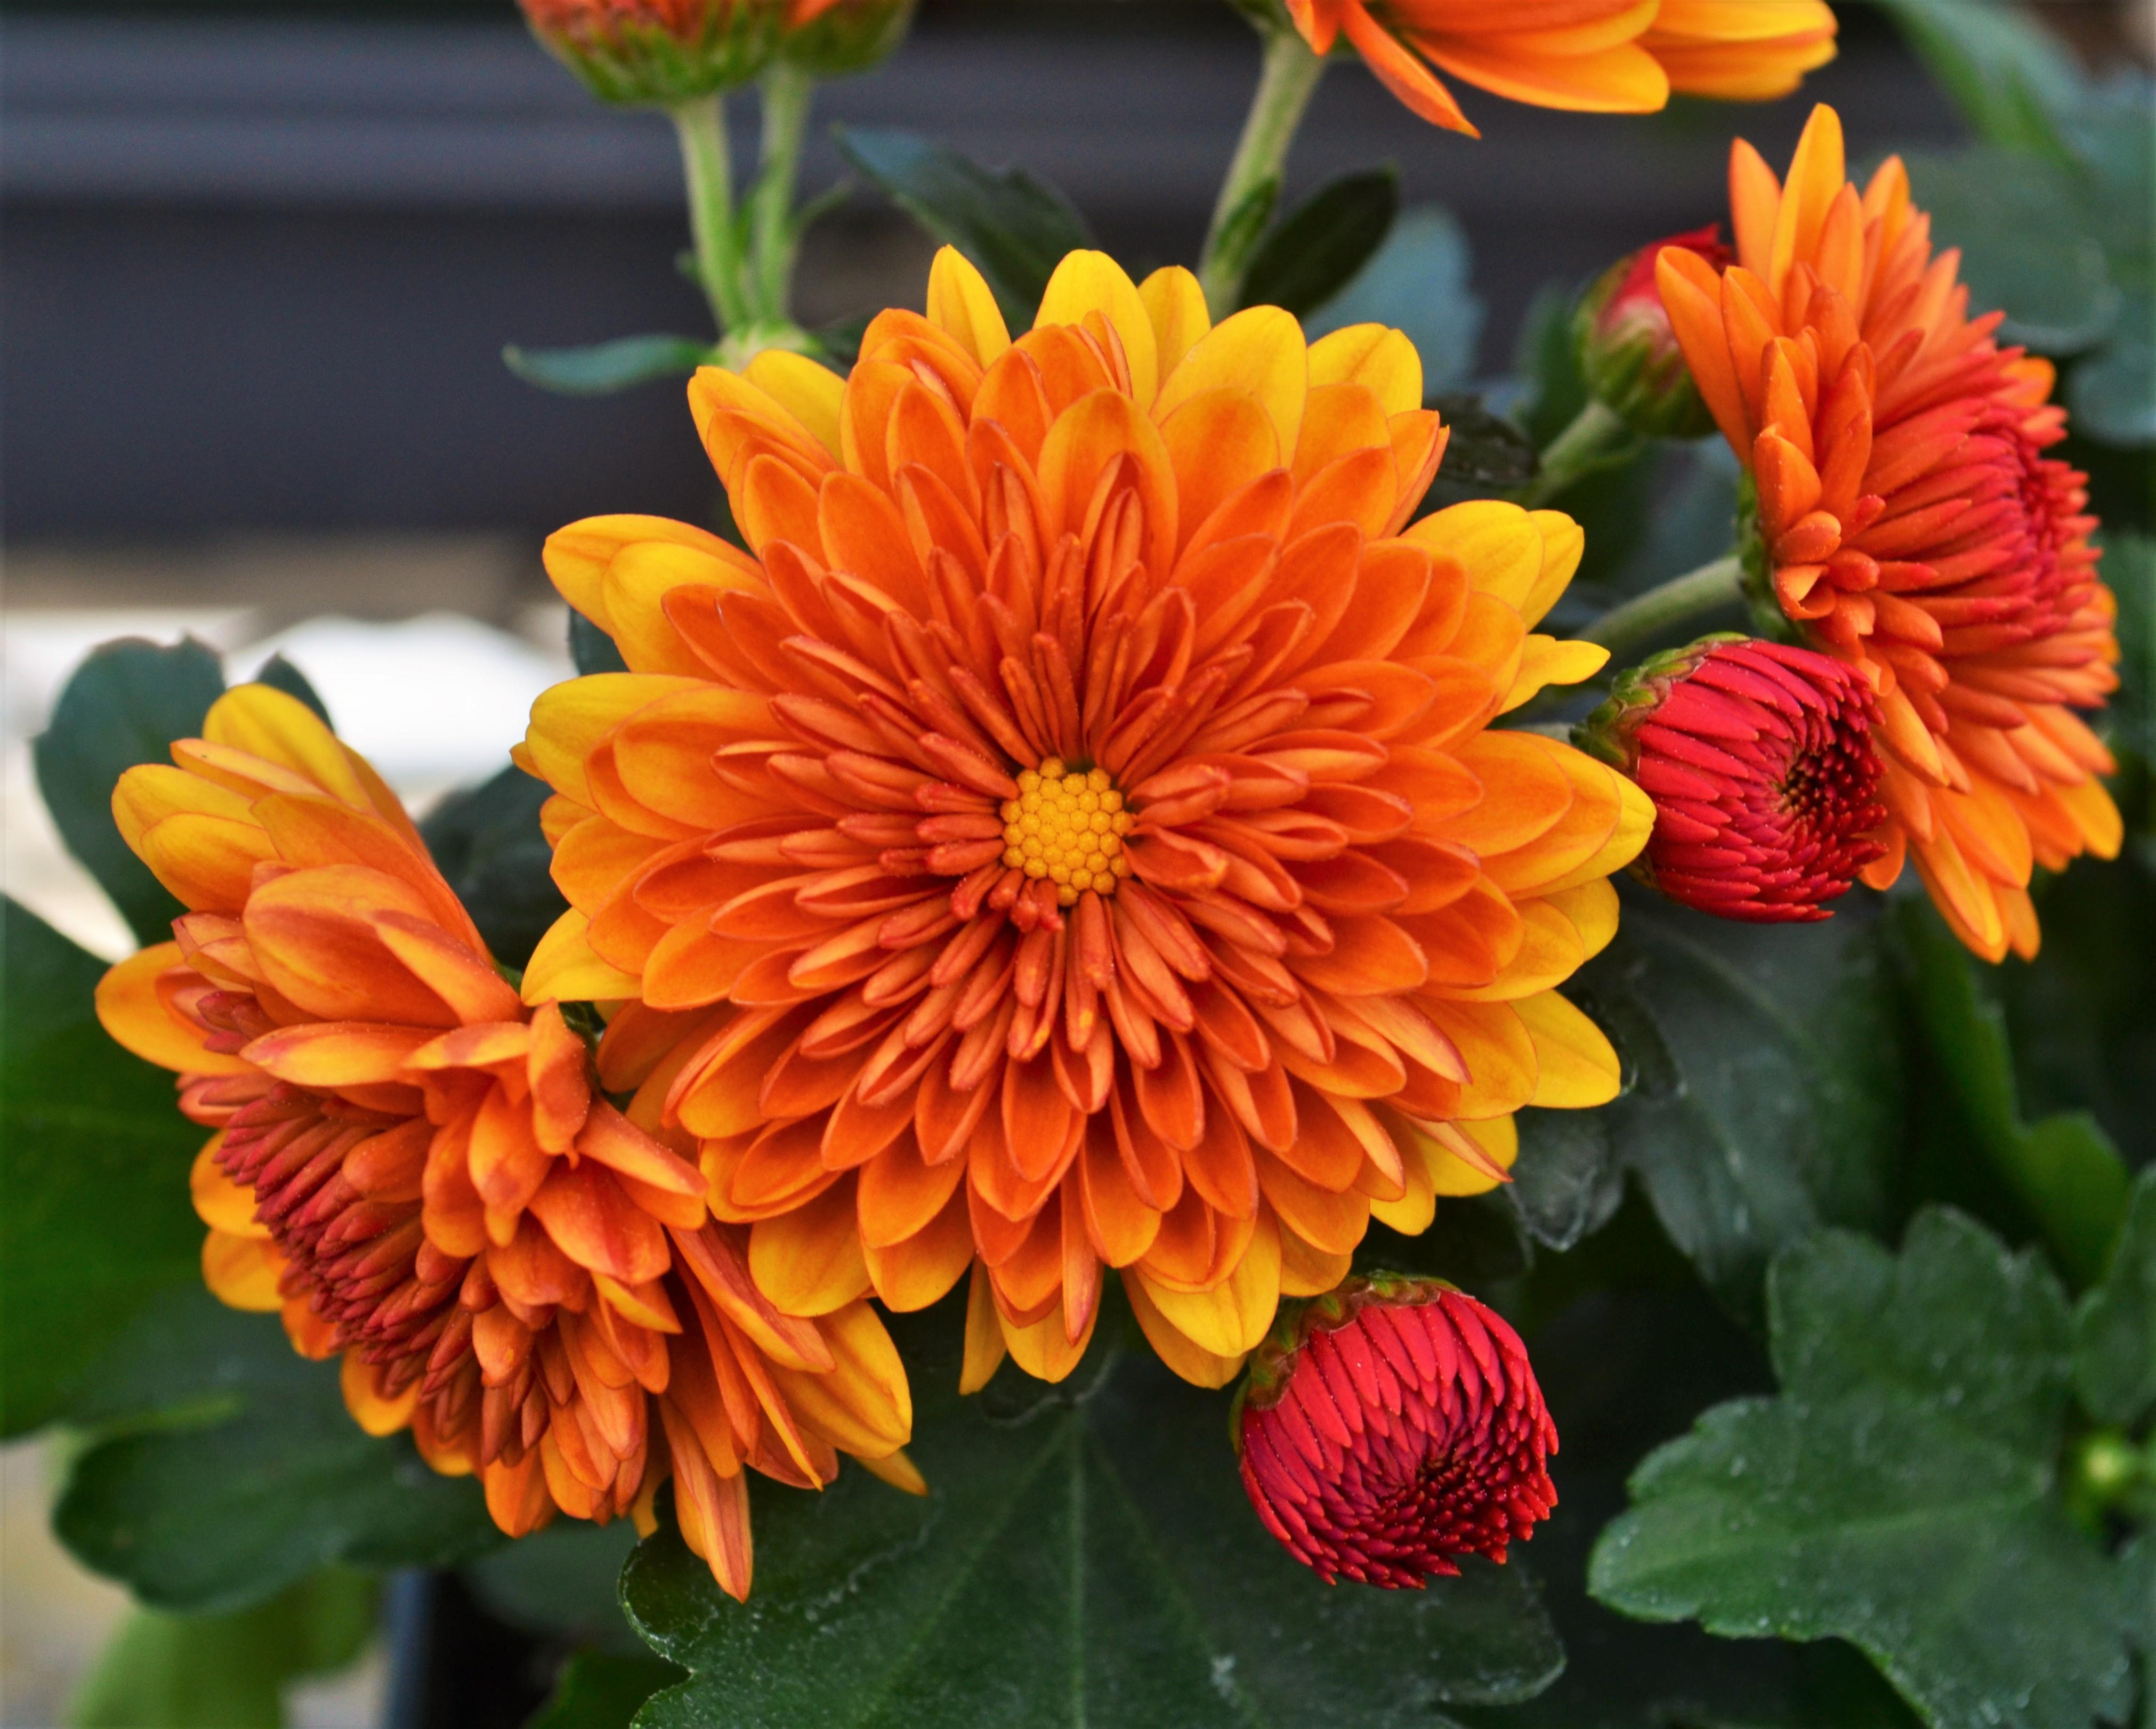 Chrysanthemum Cheryl 'Spicy Orange' - Mum from Hillcrest Nursery